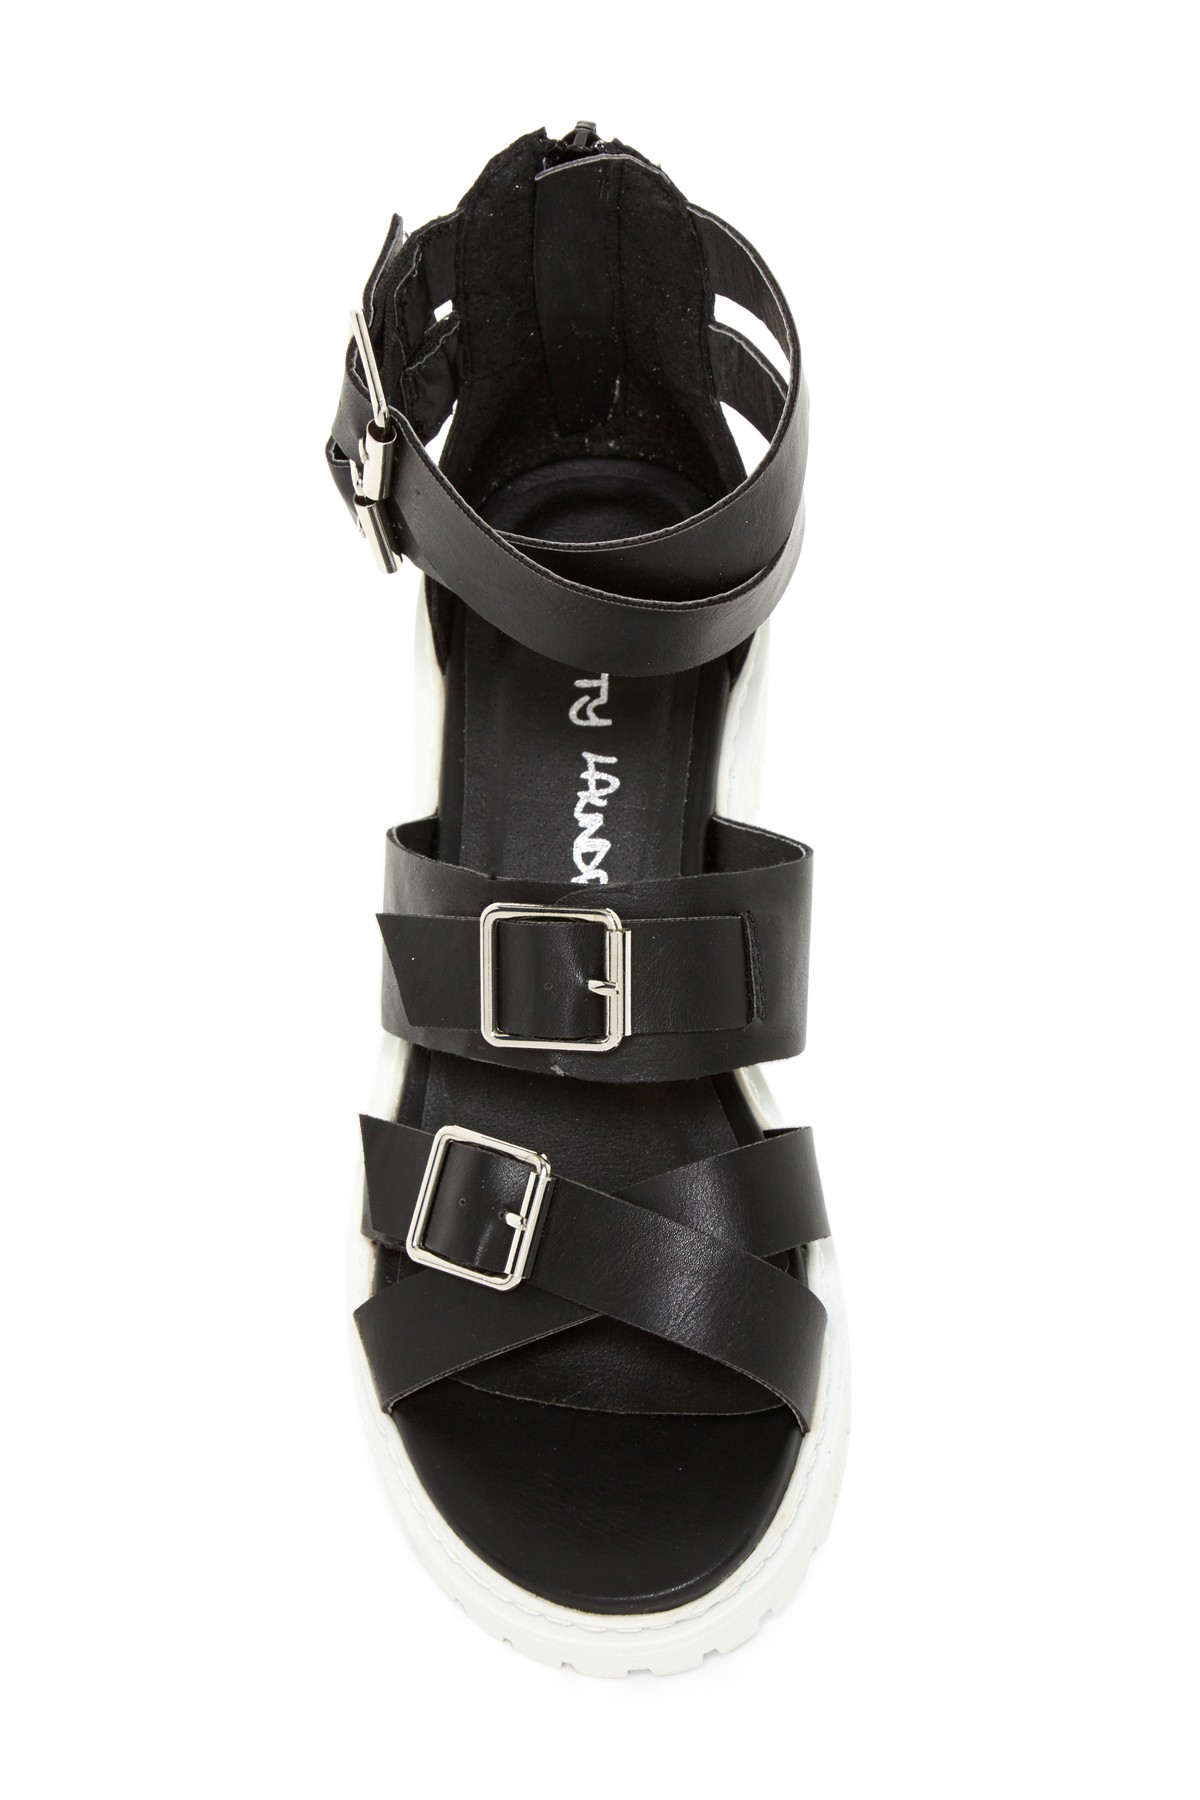 Dirty Laundry Womens Platform Sandals in Black Color, Size 8.5 SRZ | eBay